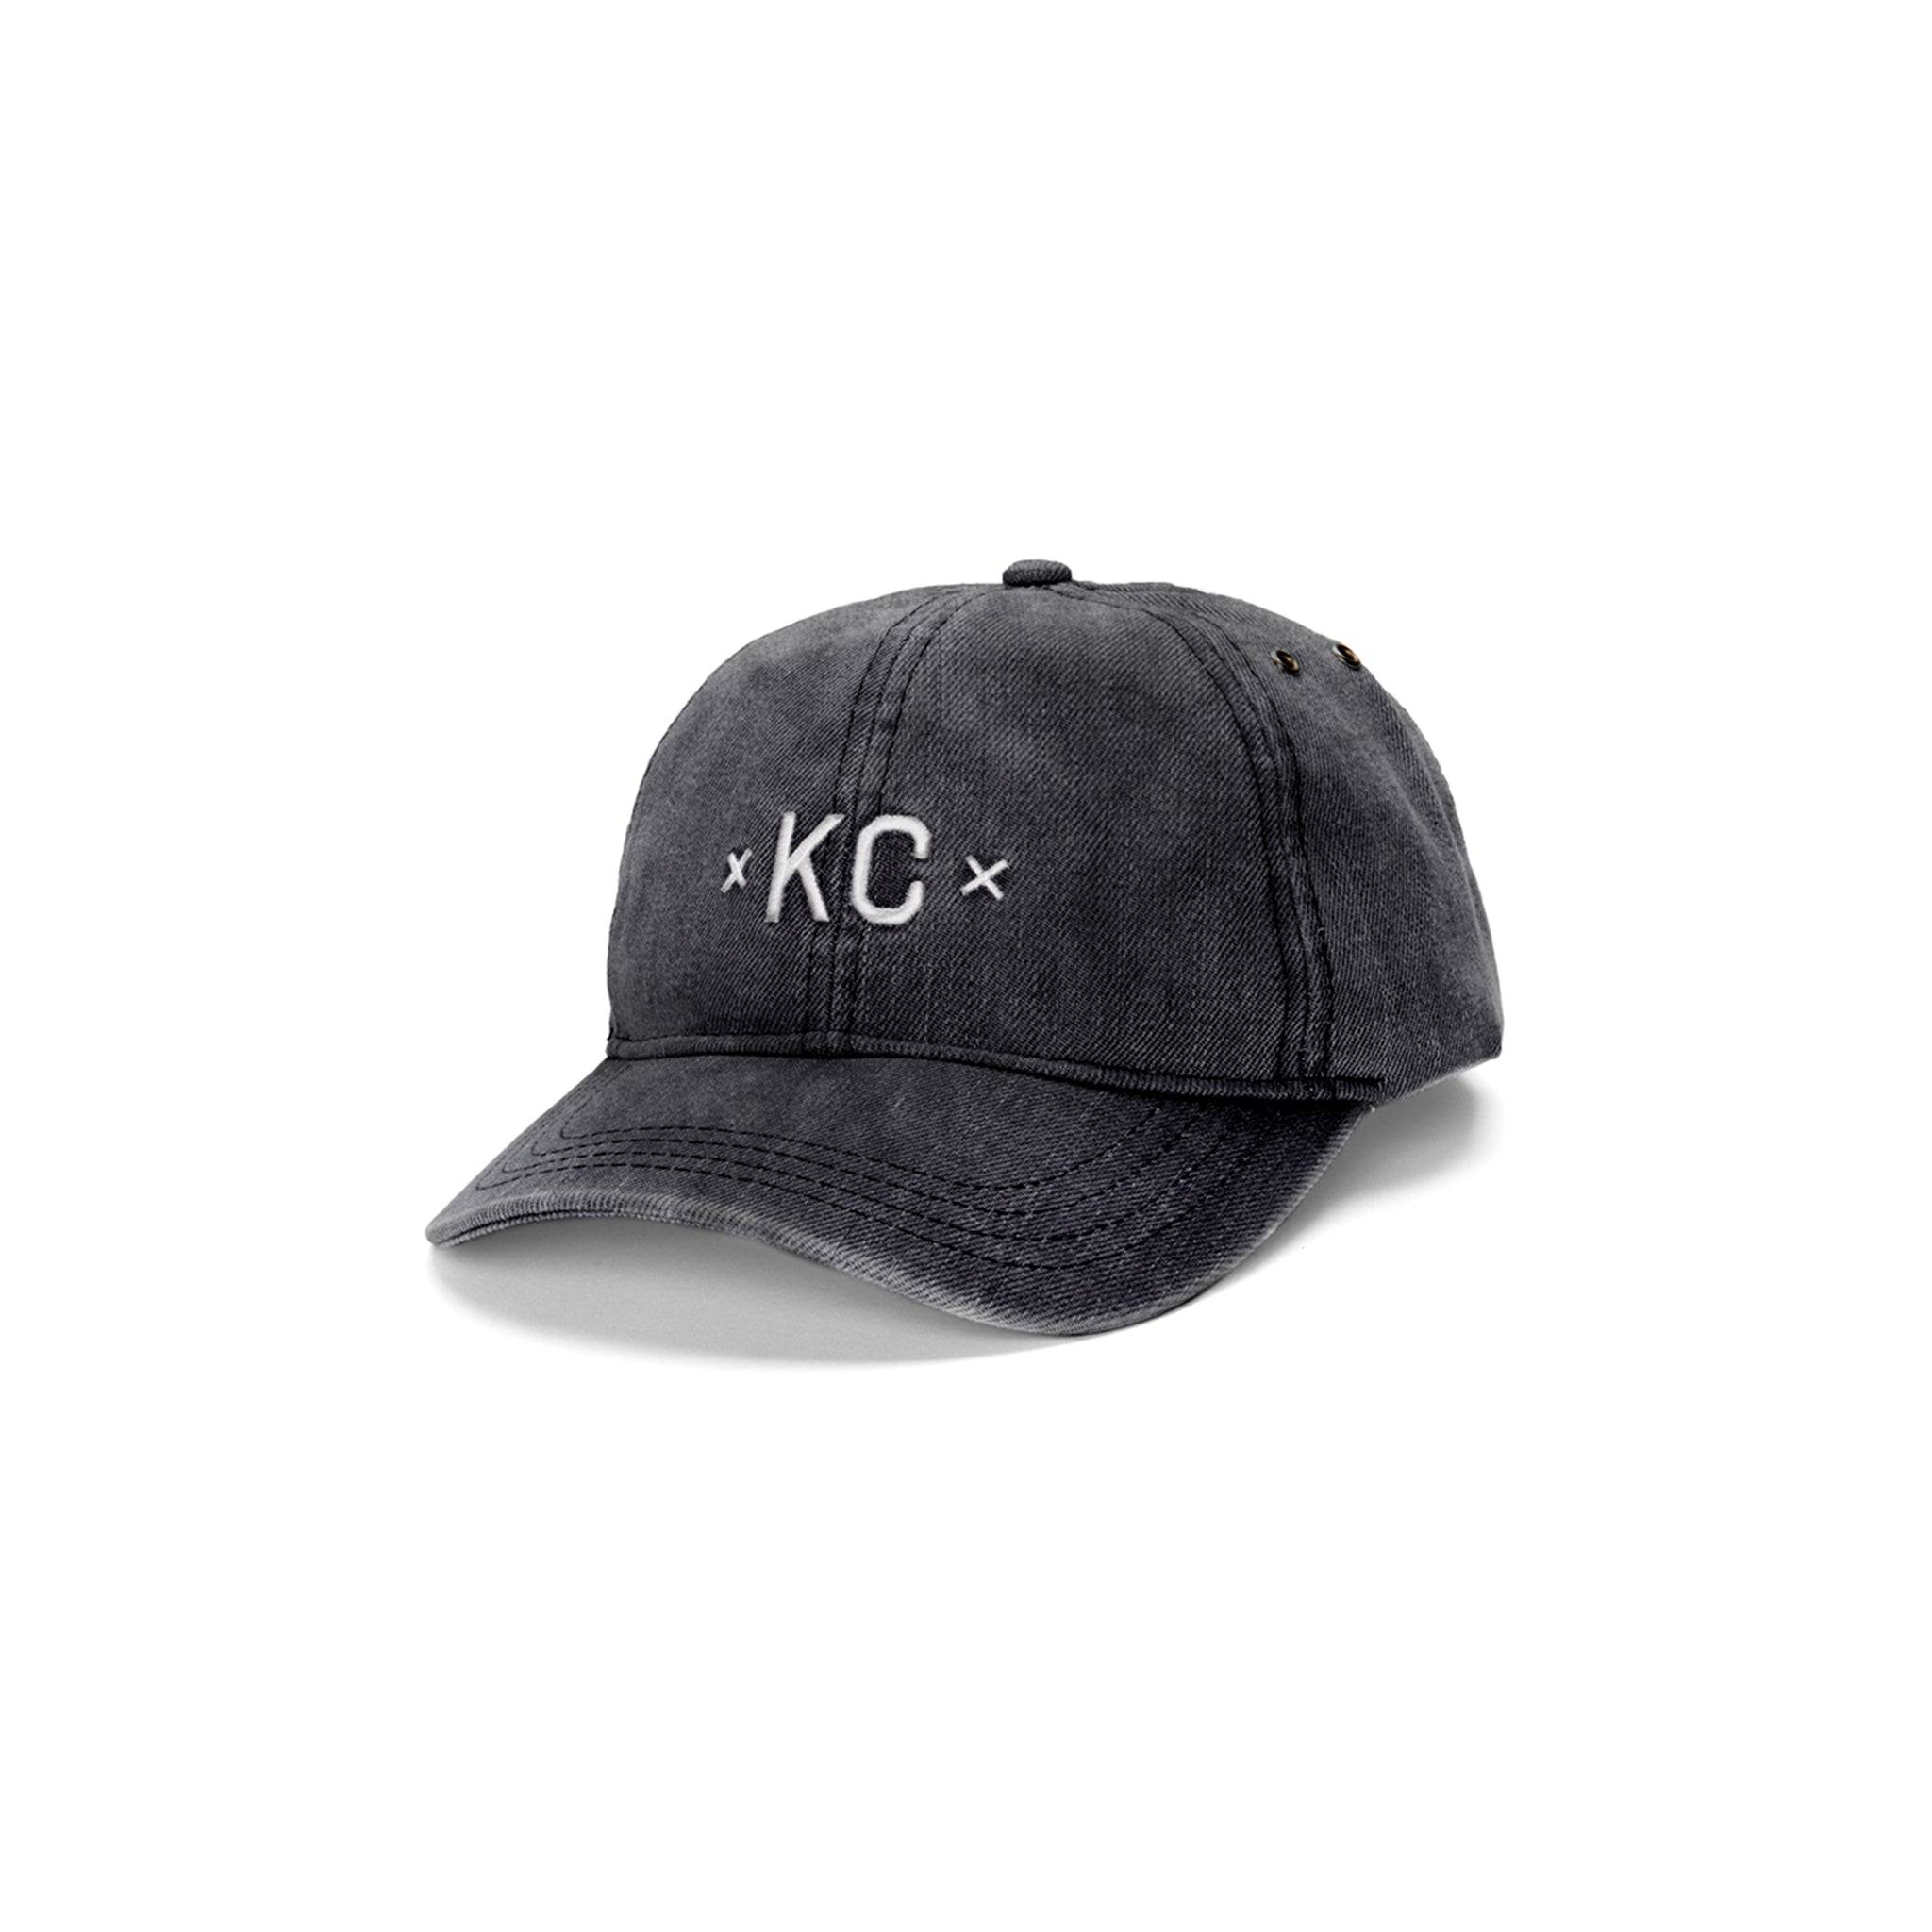 Signature KC Dad Hat - Black Denim by Made Mobb